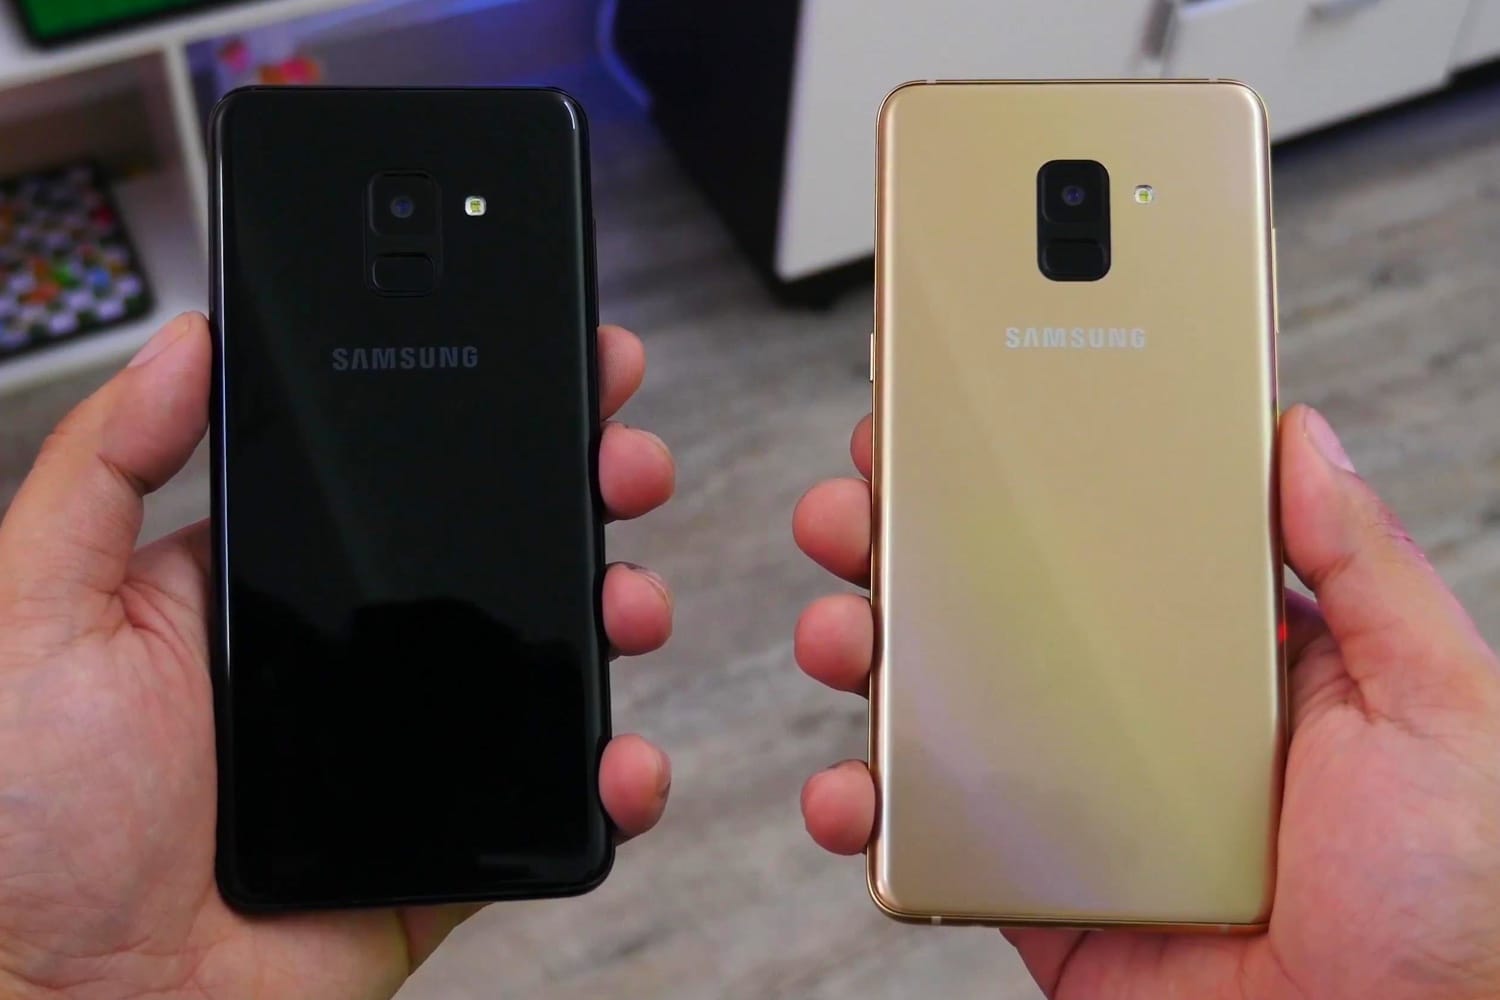 Samsung Galaxy J3 и Galaxy J3 Pro готовы к старту продаж